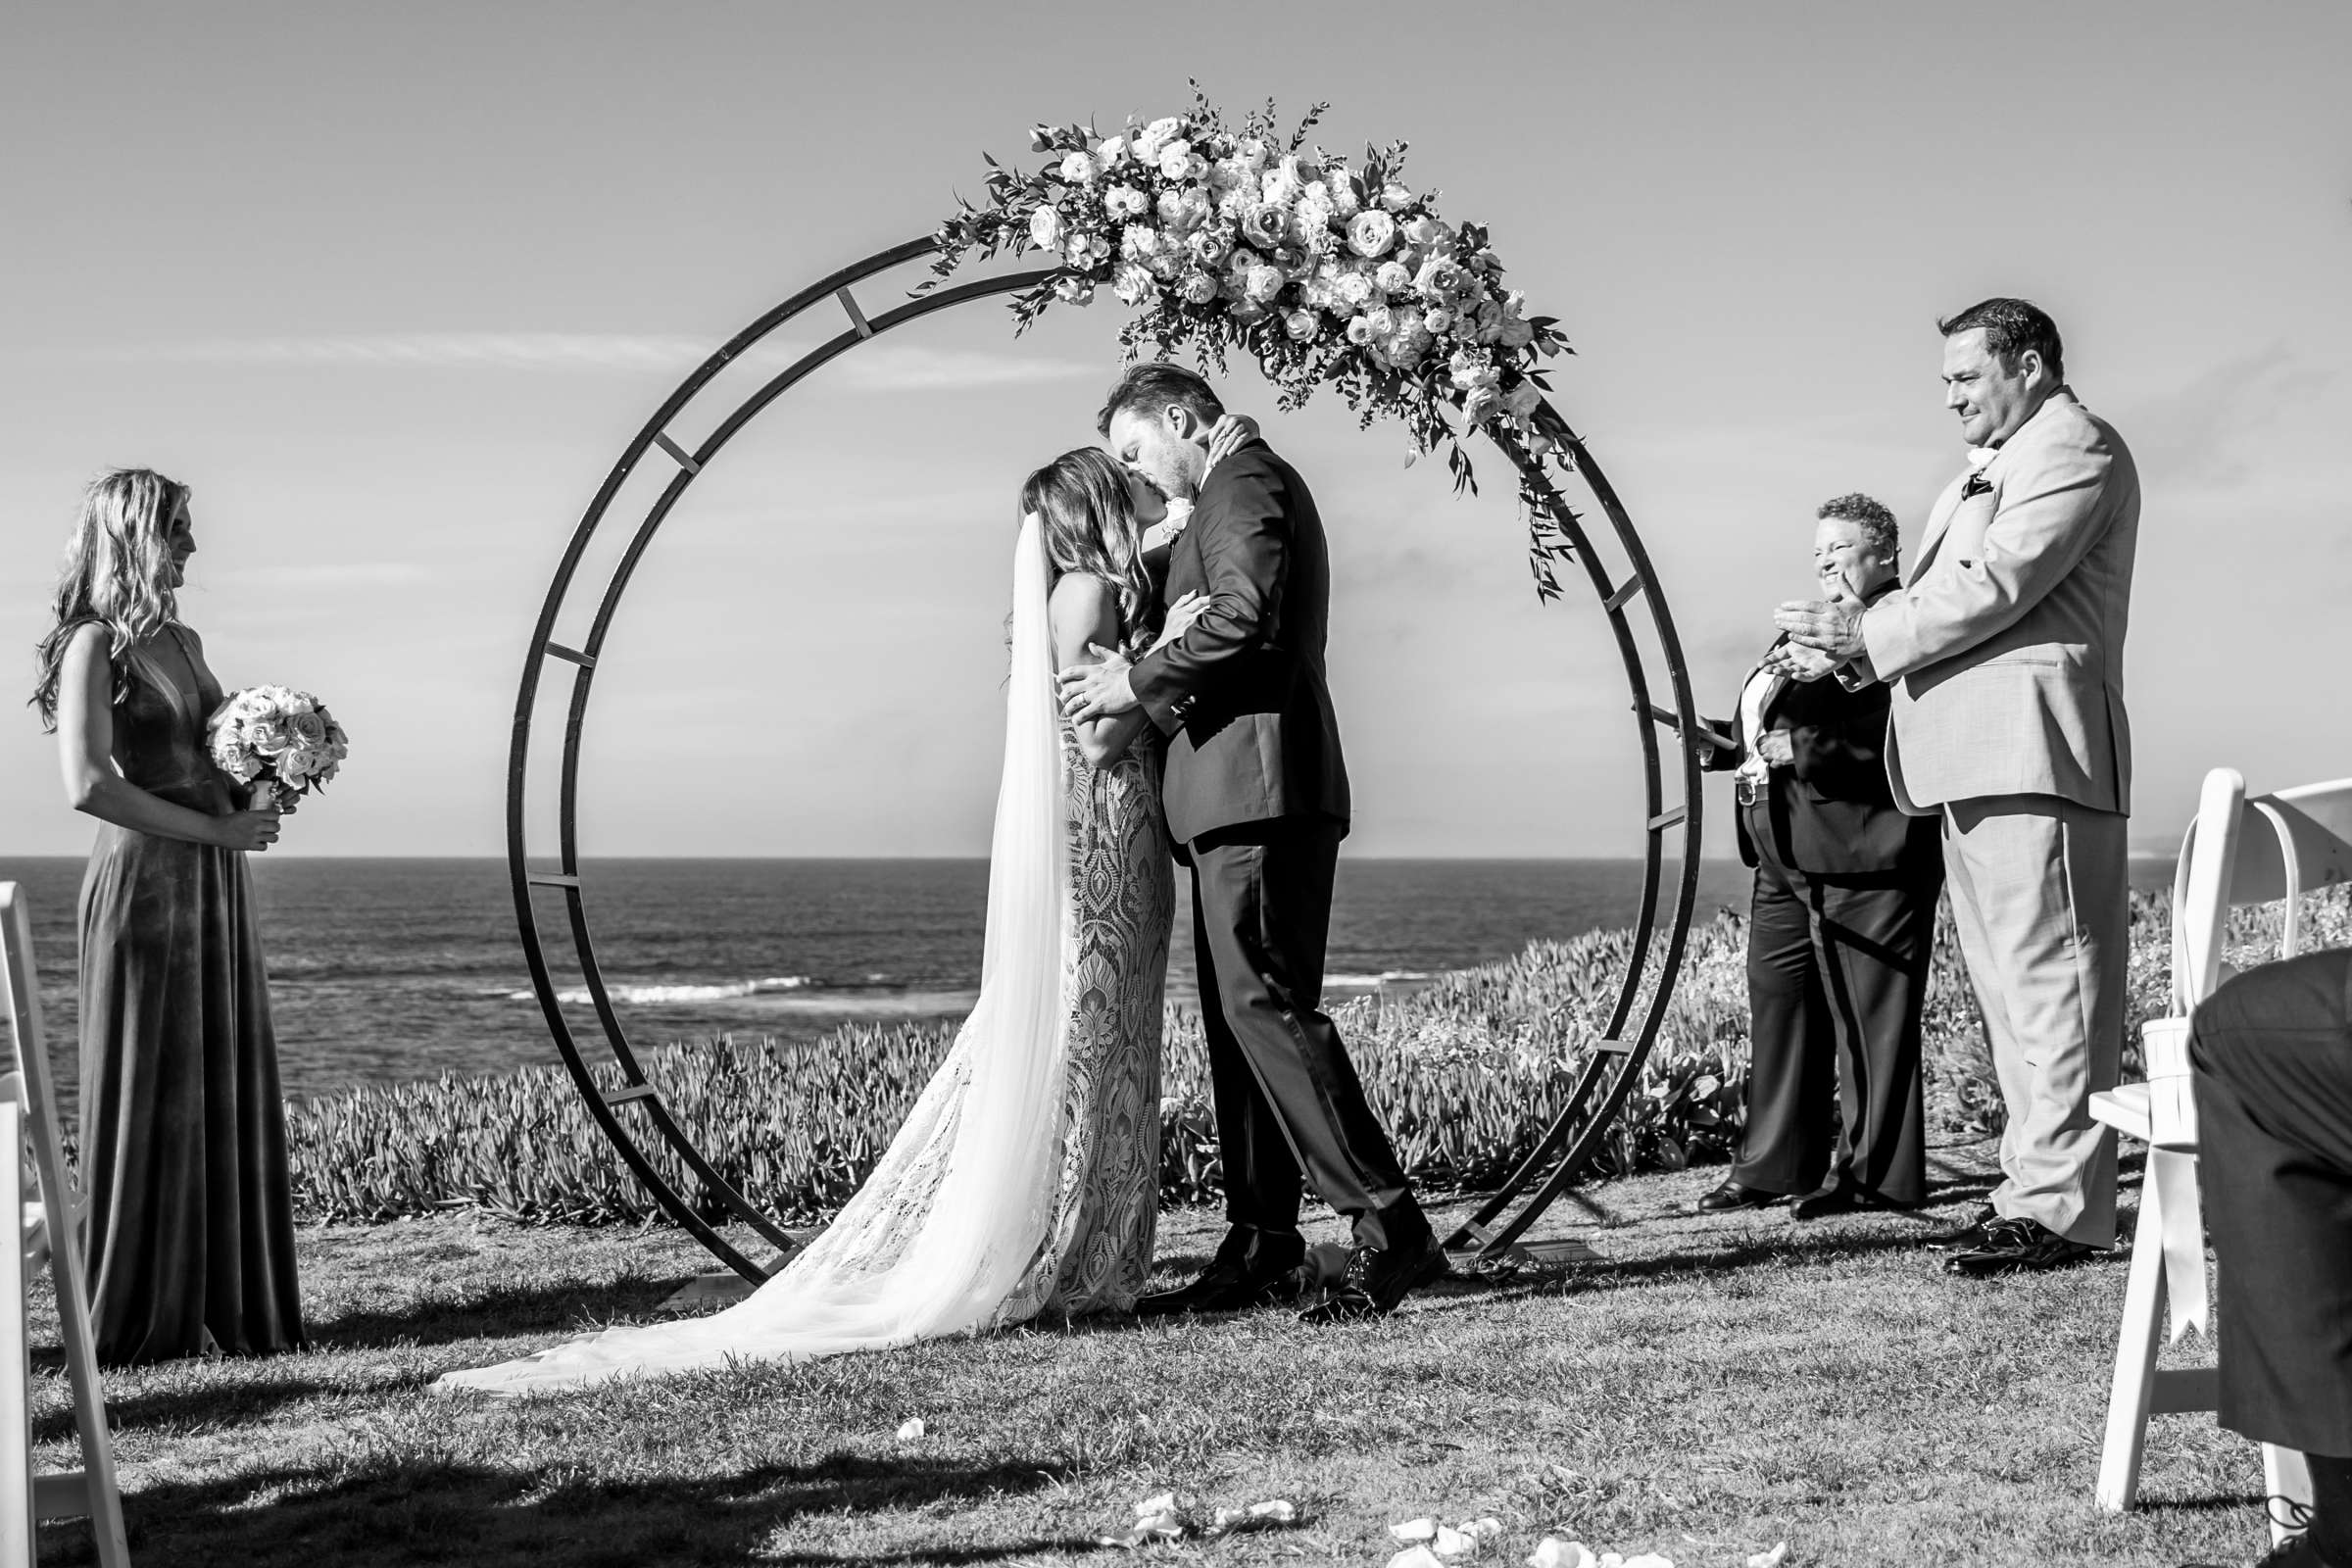 Cuvier Park-The Wedding Bowl Wedding, Ilene and David Wedding Photo #18 by True Photography